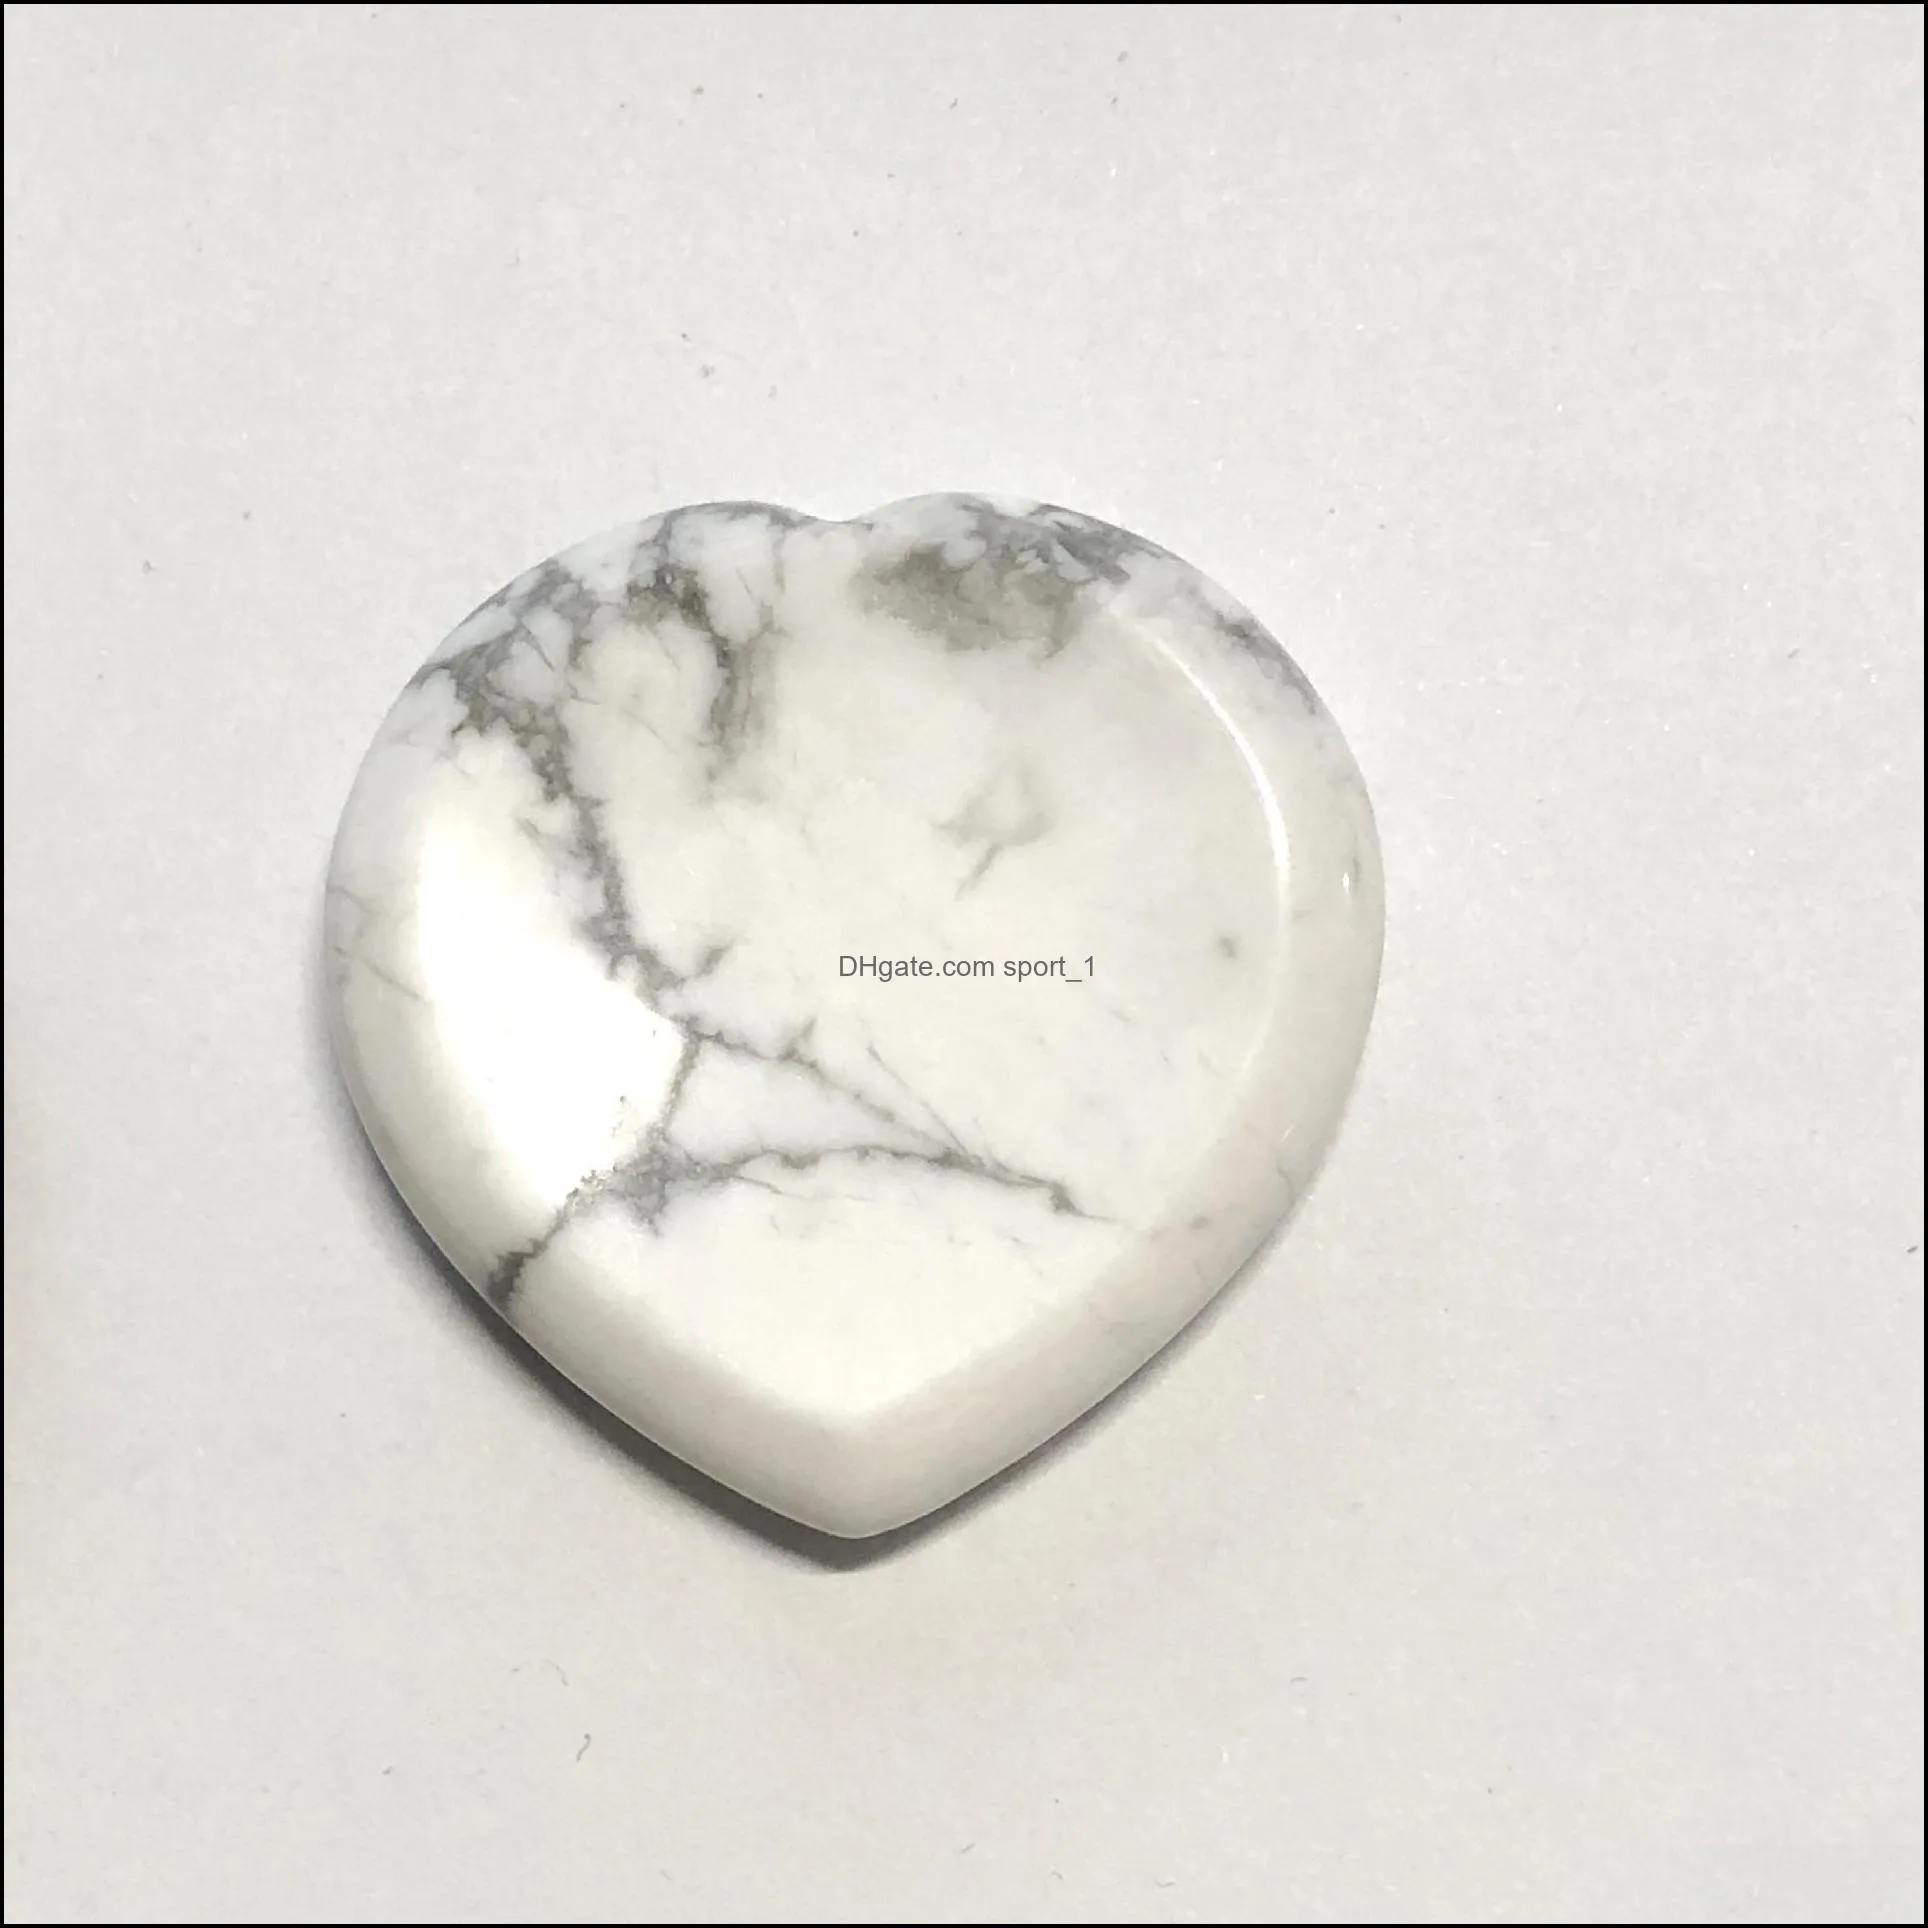 40x7mm heart worry stone thumb gemstone natural healing crystals therapy reiki treatment spiritual minerals massage palm gem